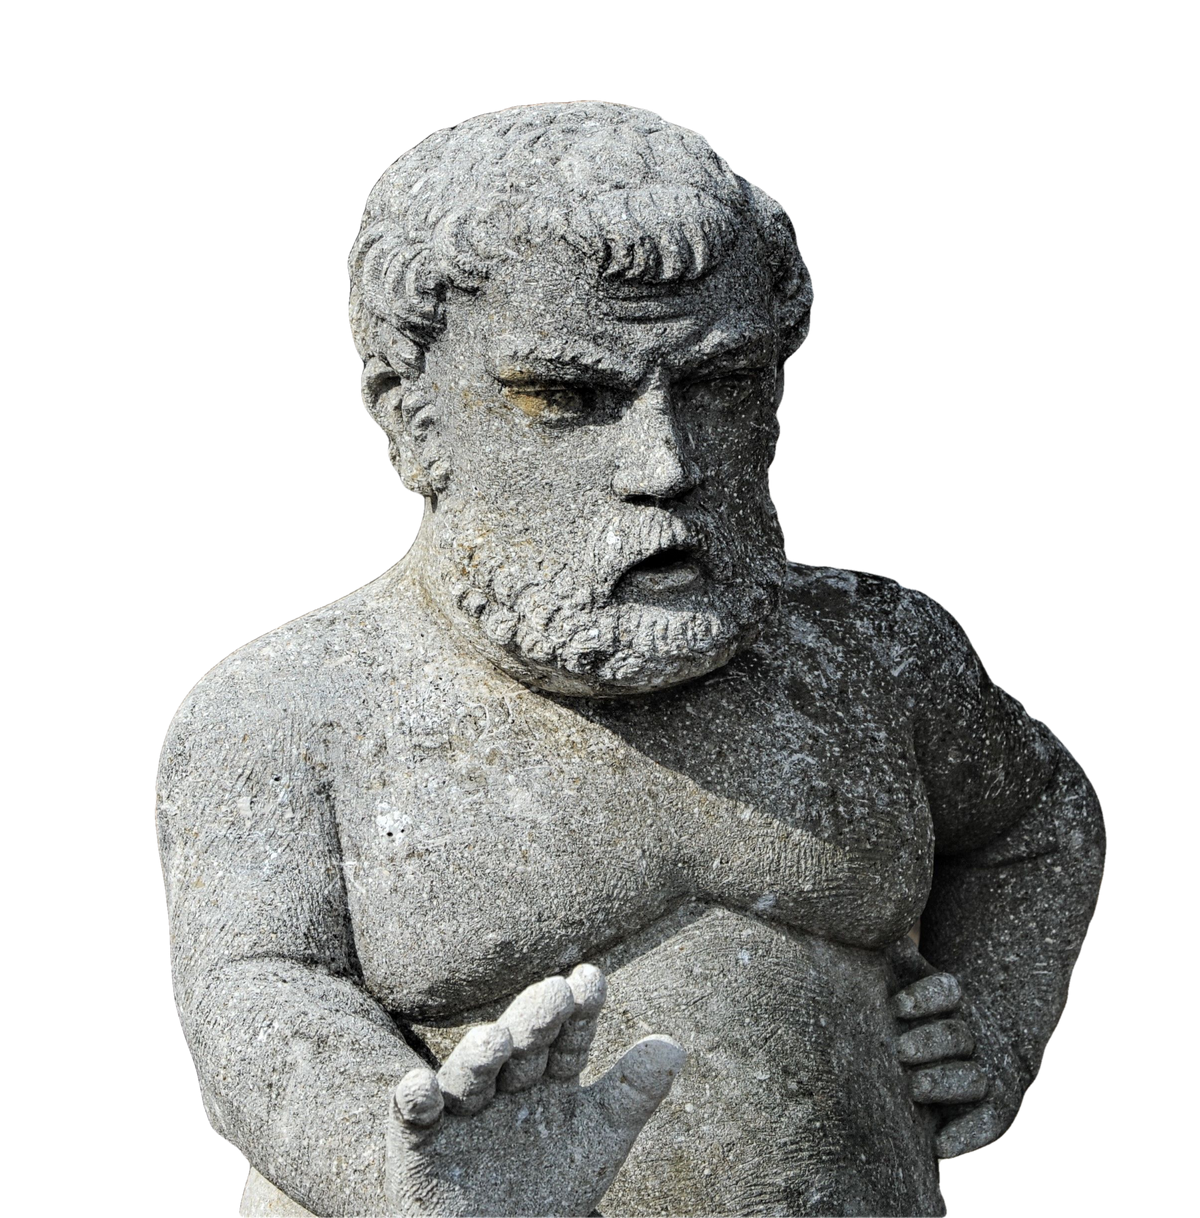 Limestone Sculpture of Medici's Dwarf Morgante in the Manner of Valerio Cioli